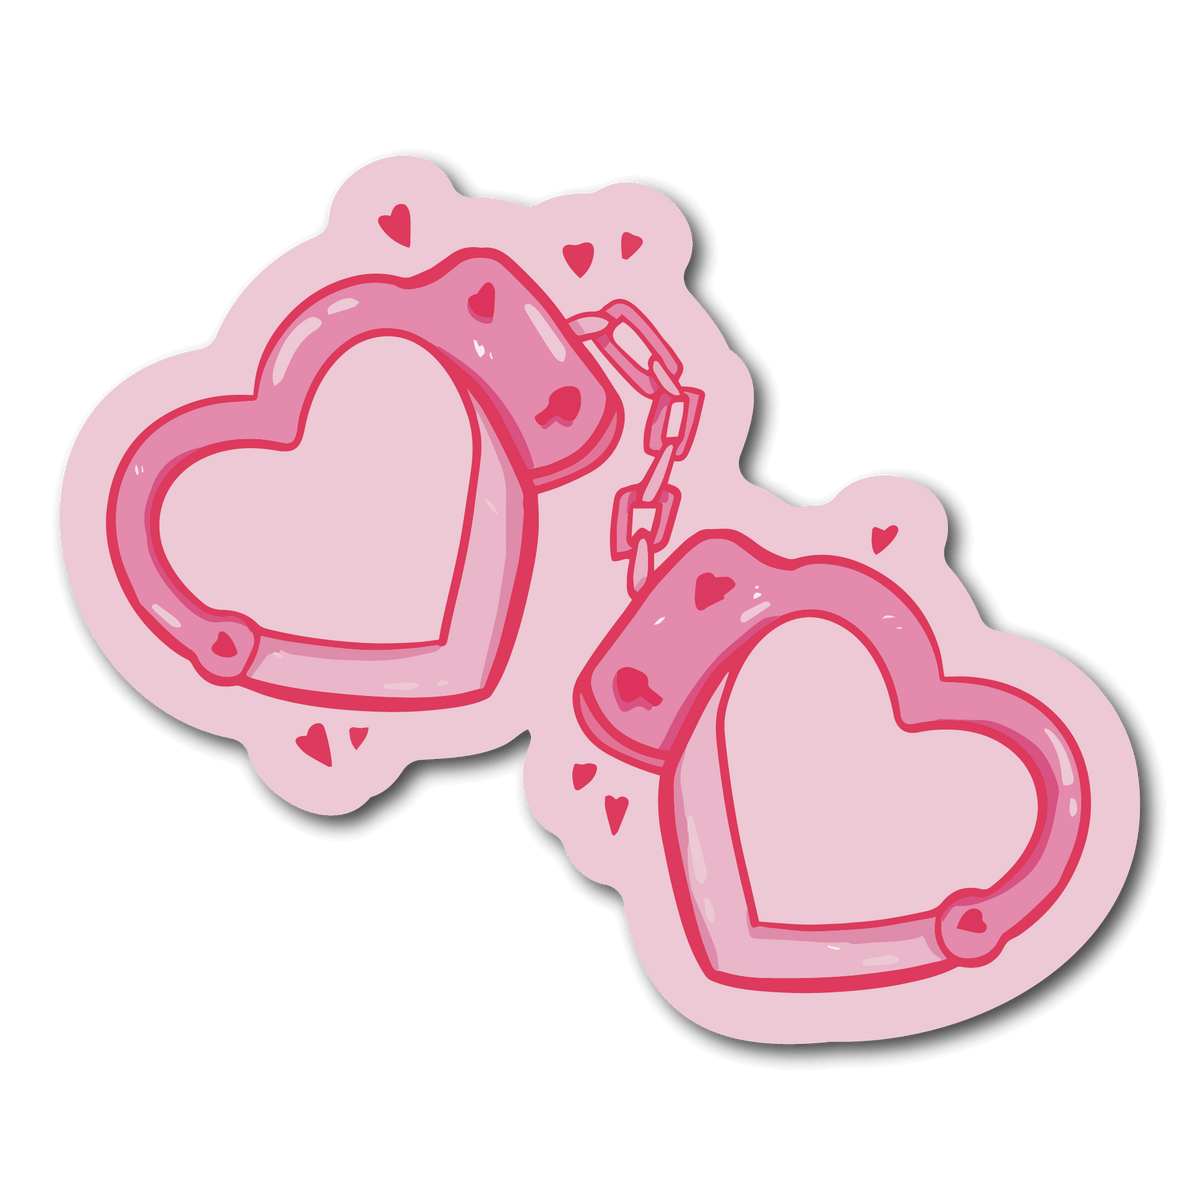 Small Sticker of Pink Heart Shaped Handcuffs